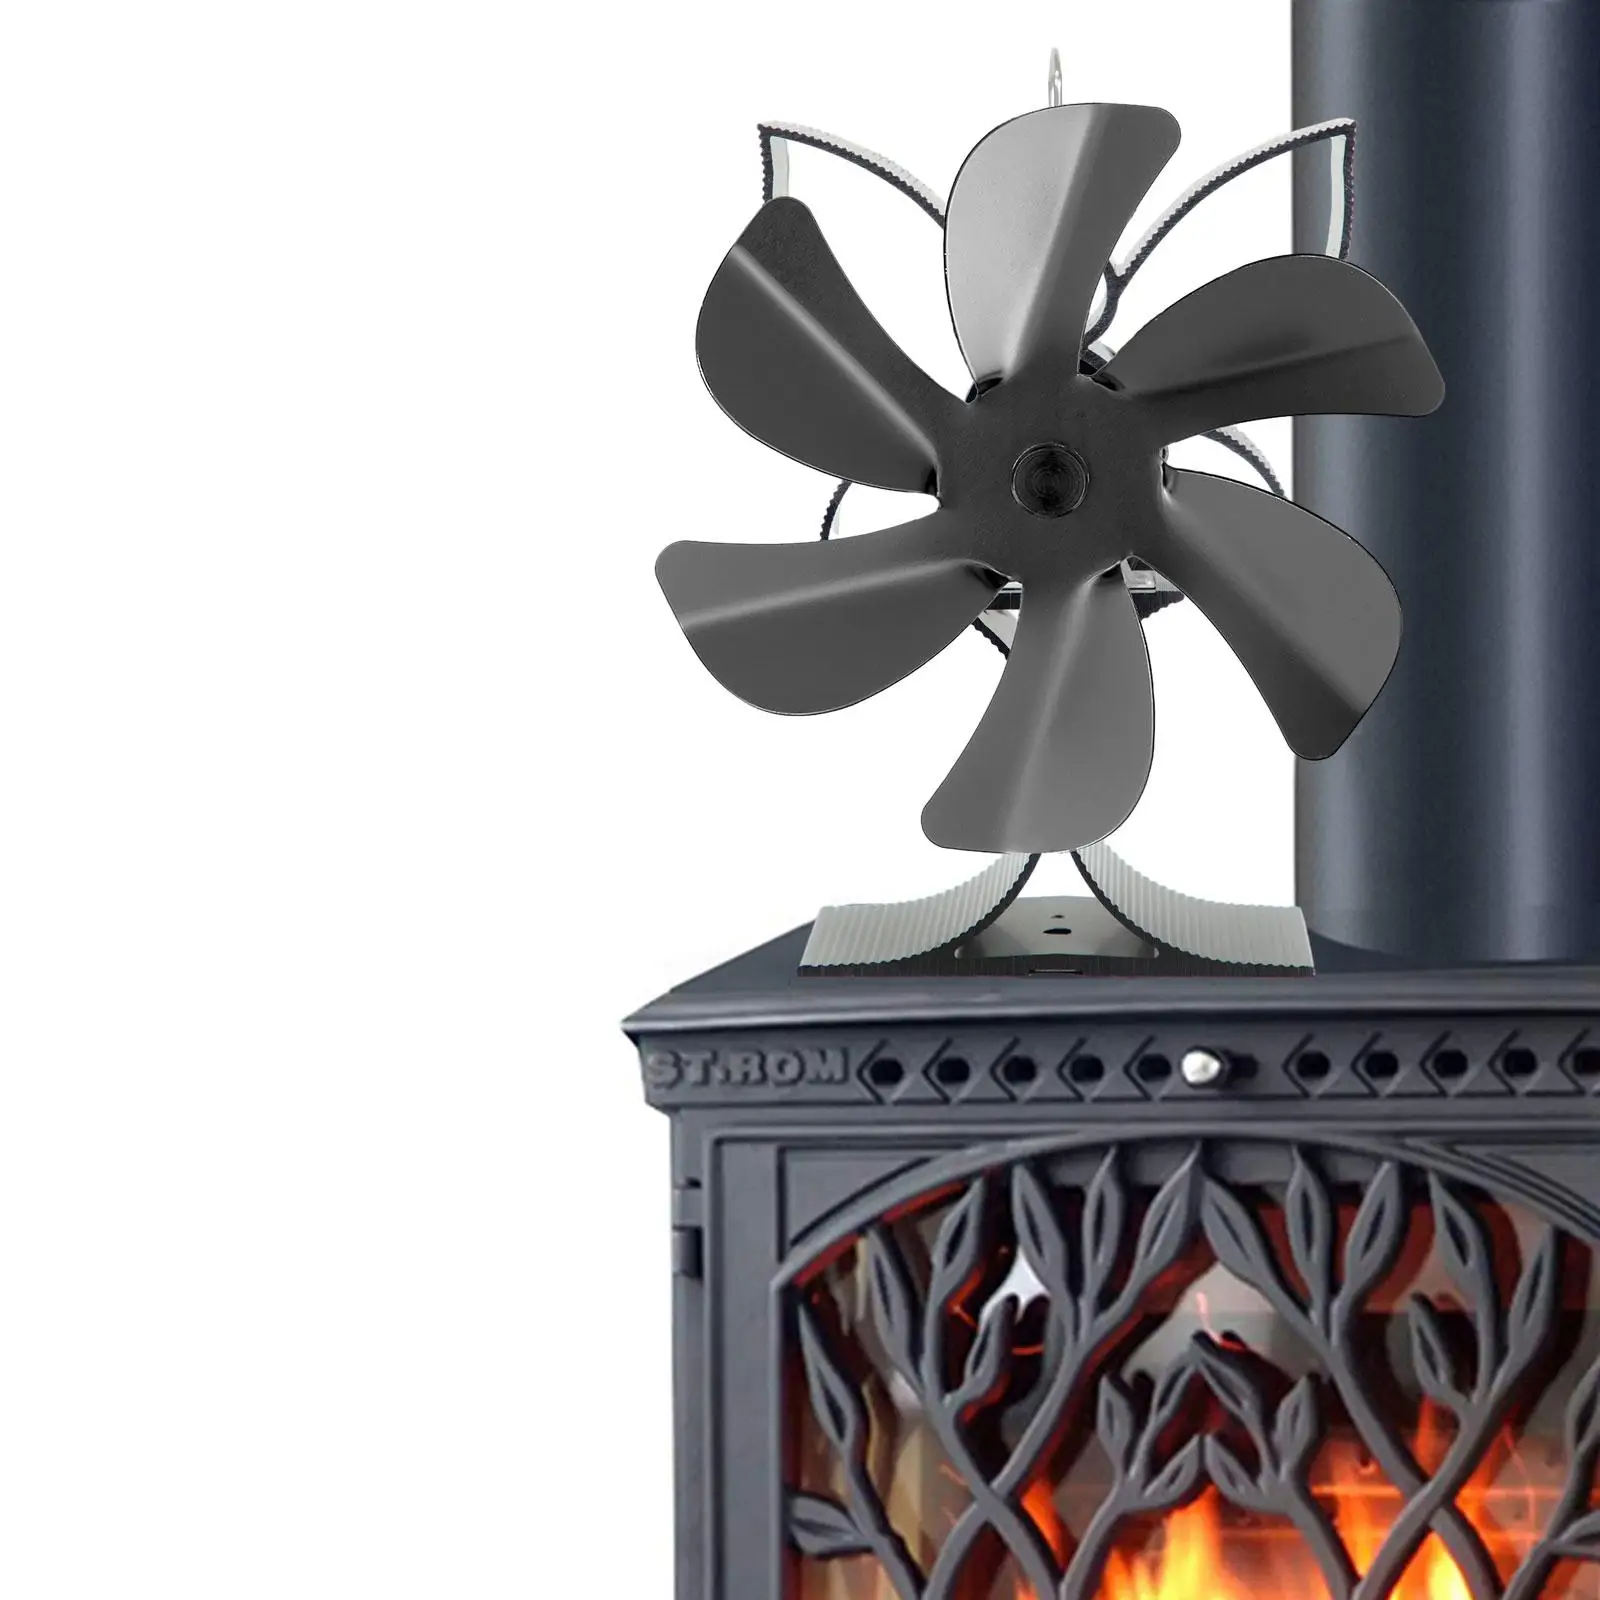 Xmas Logs Burner Heat Powered Fireplace Fan Eco Friendly Working 122-662°F Versatile Lightweight Black Color Height 18.5cm